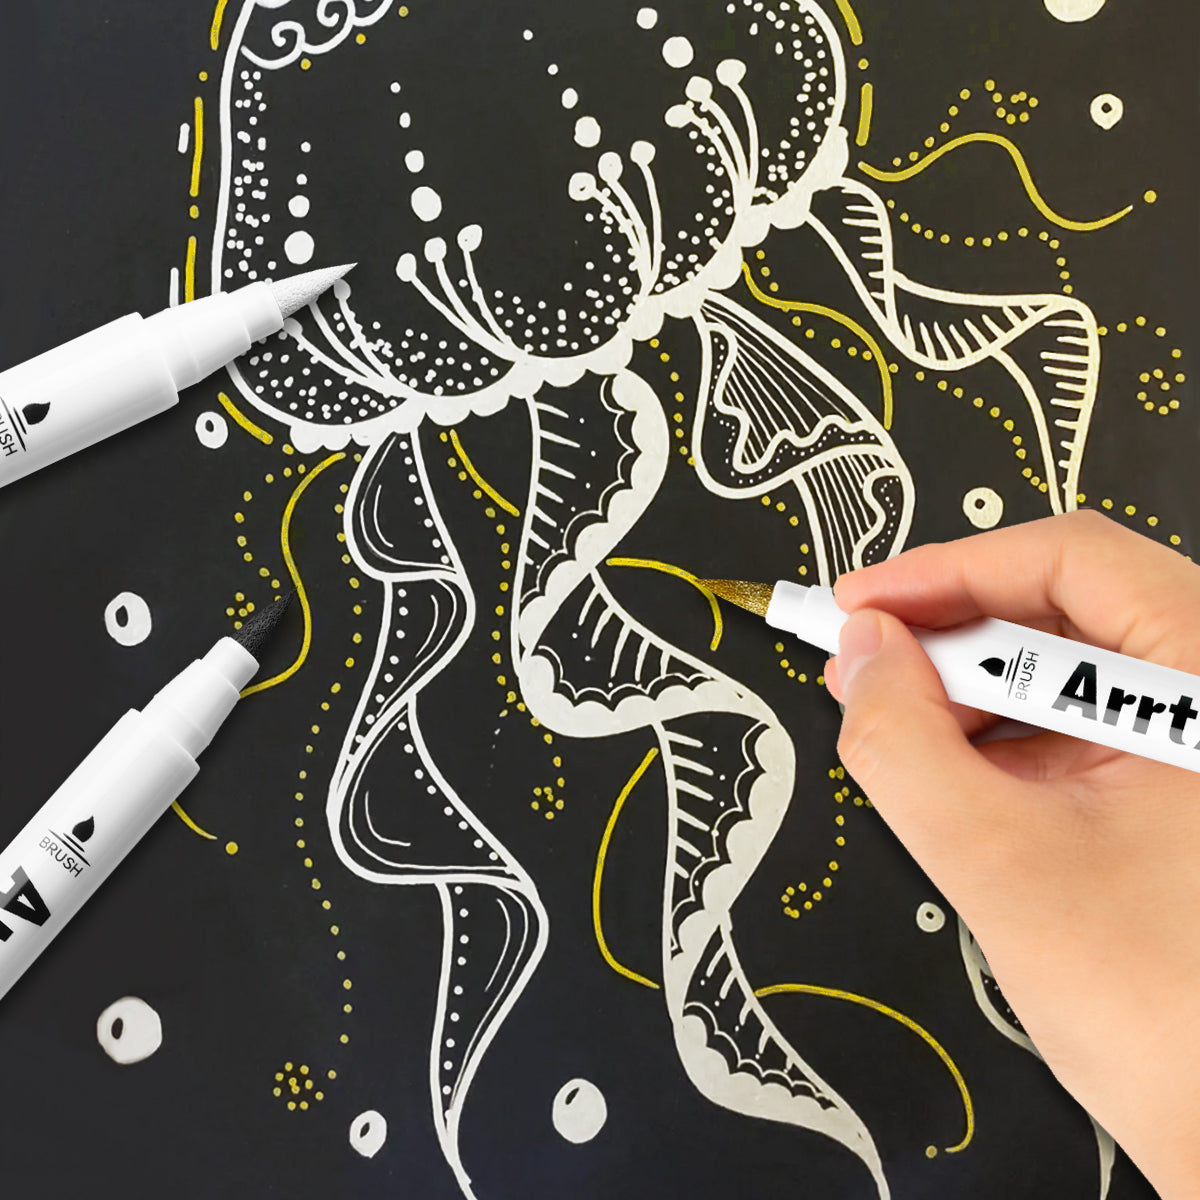 Arrtx Acrylic Paint Pens 10 Pack Extra Brush Tip White Paint Markers M –  ArrtxArt